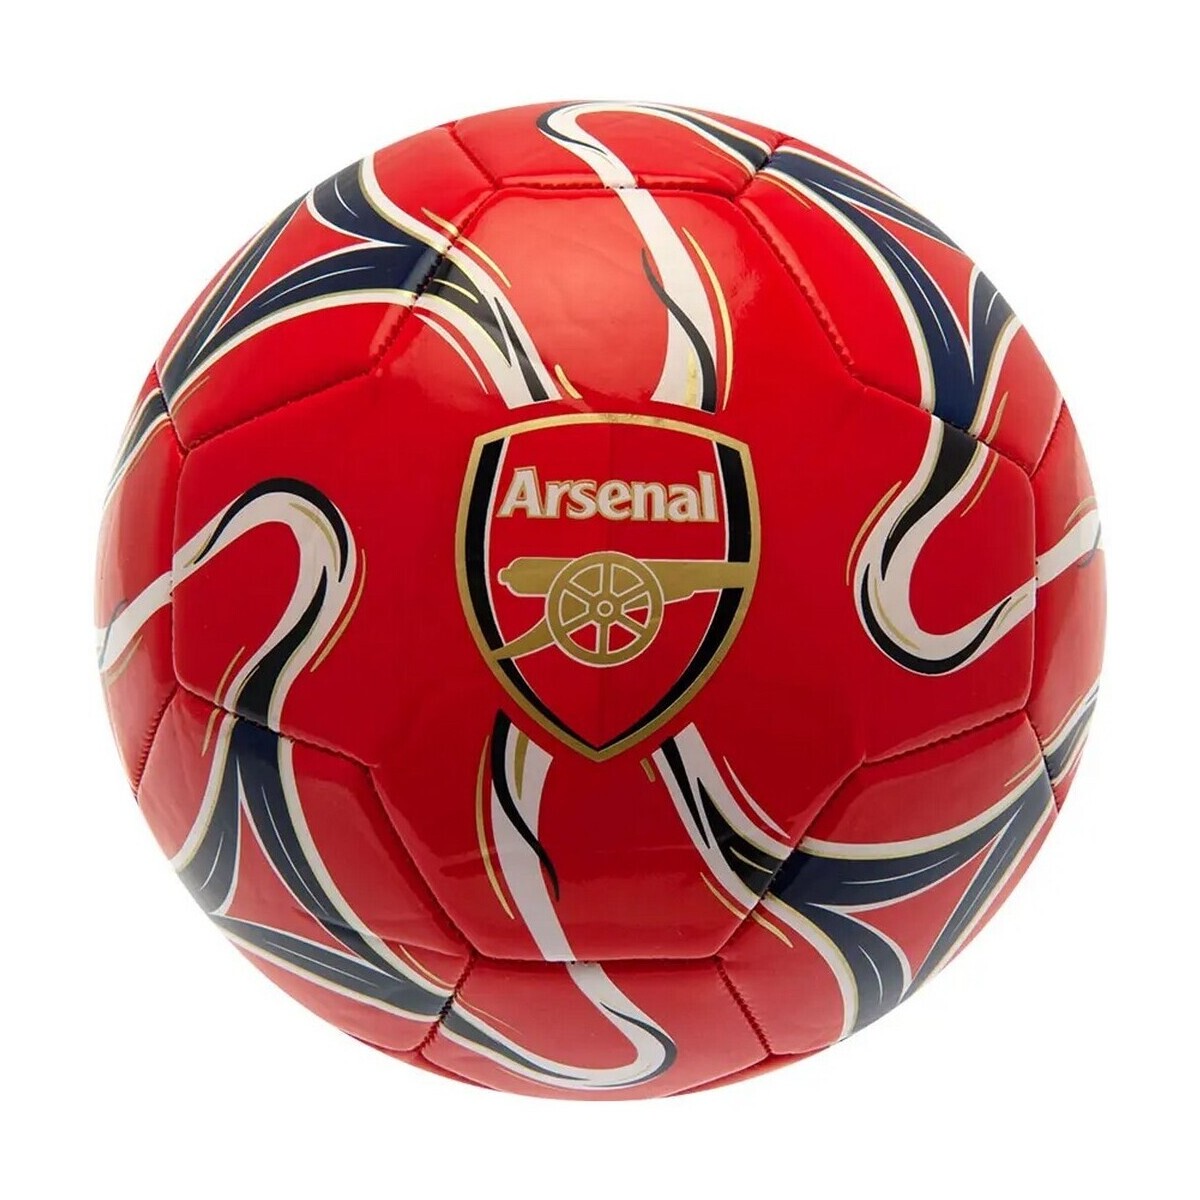 Accesorios Complemento para deporte Arsenal Fc Cosmos Rojo